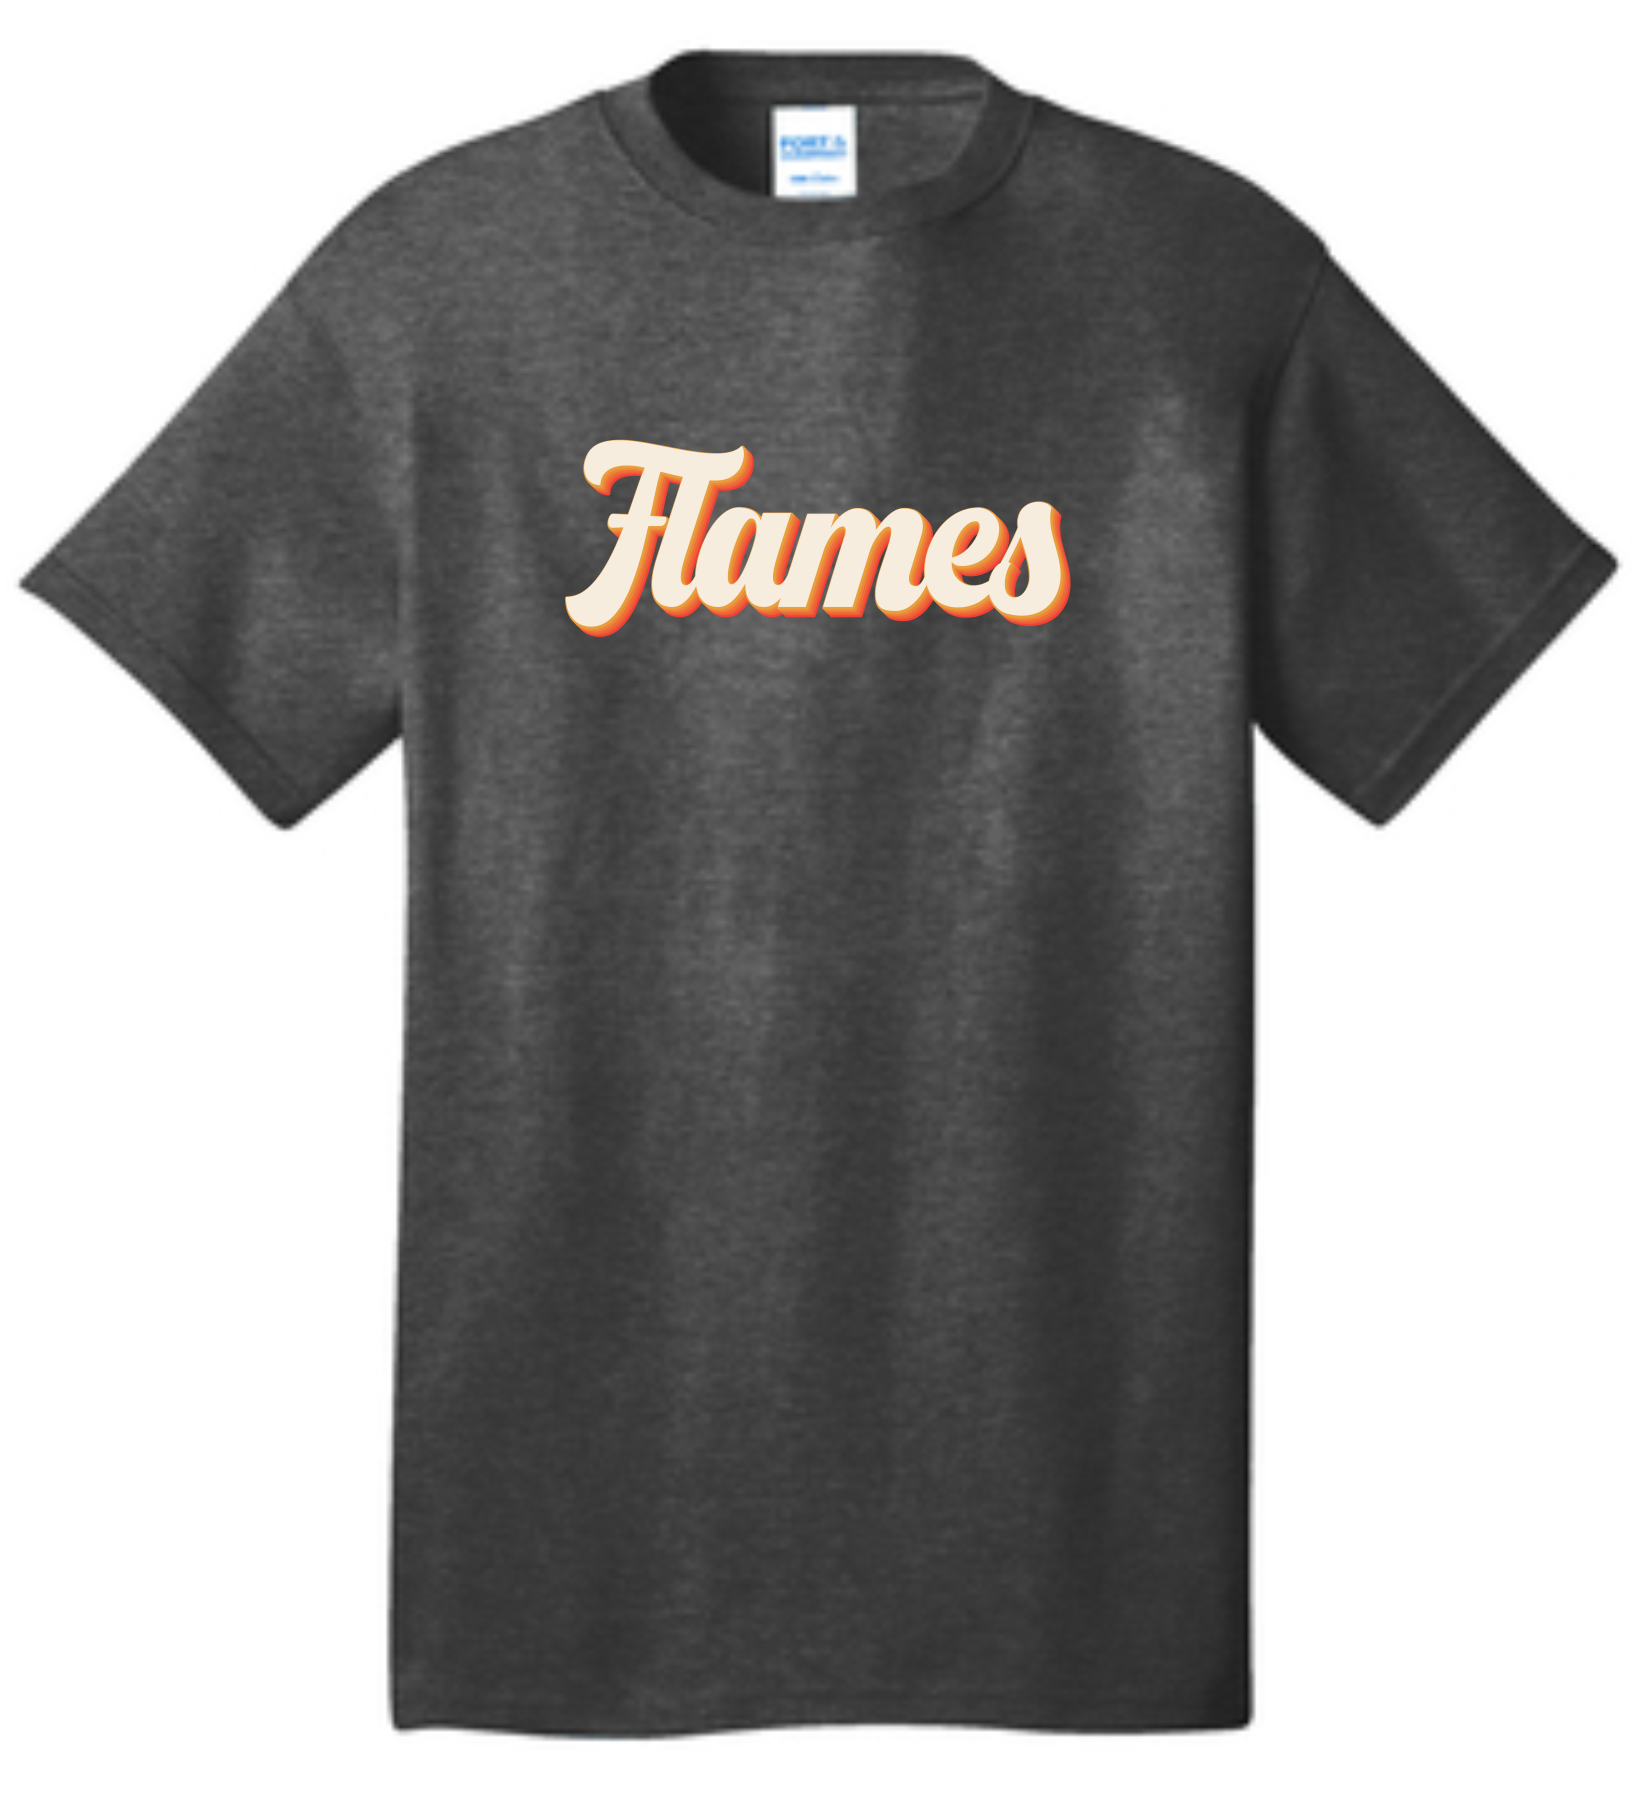 Kuest Orange Flame T-Shirt